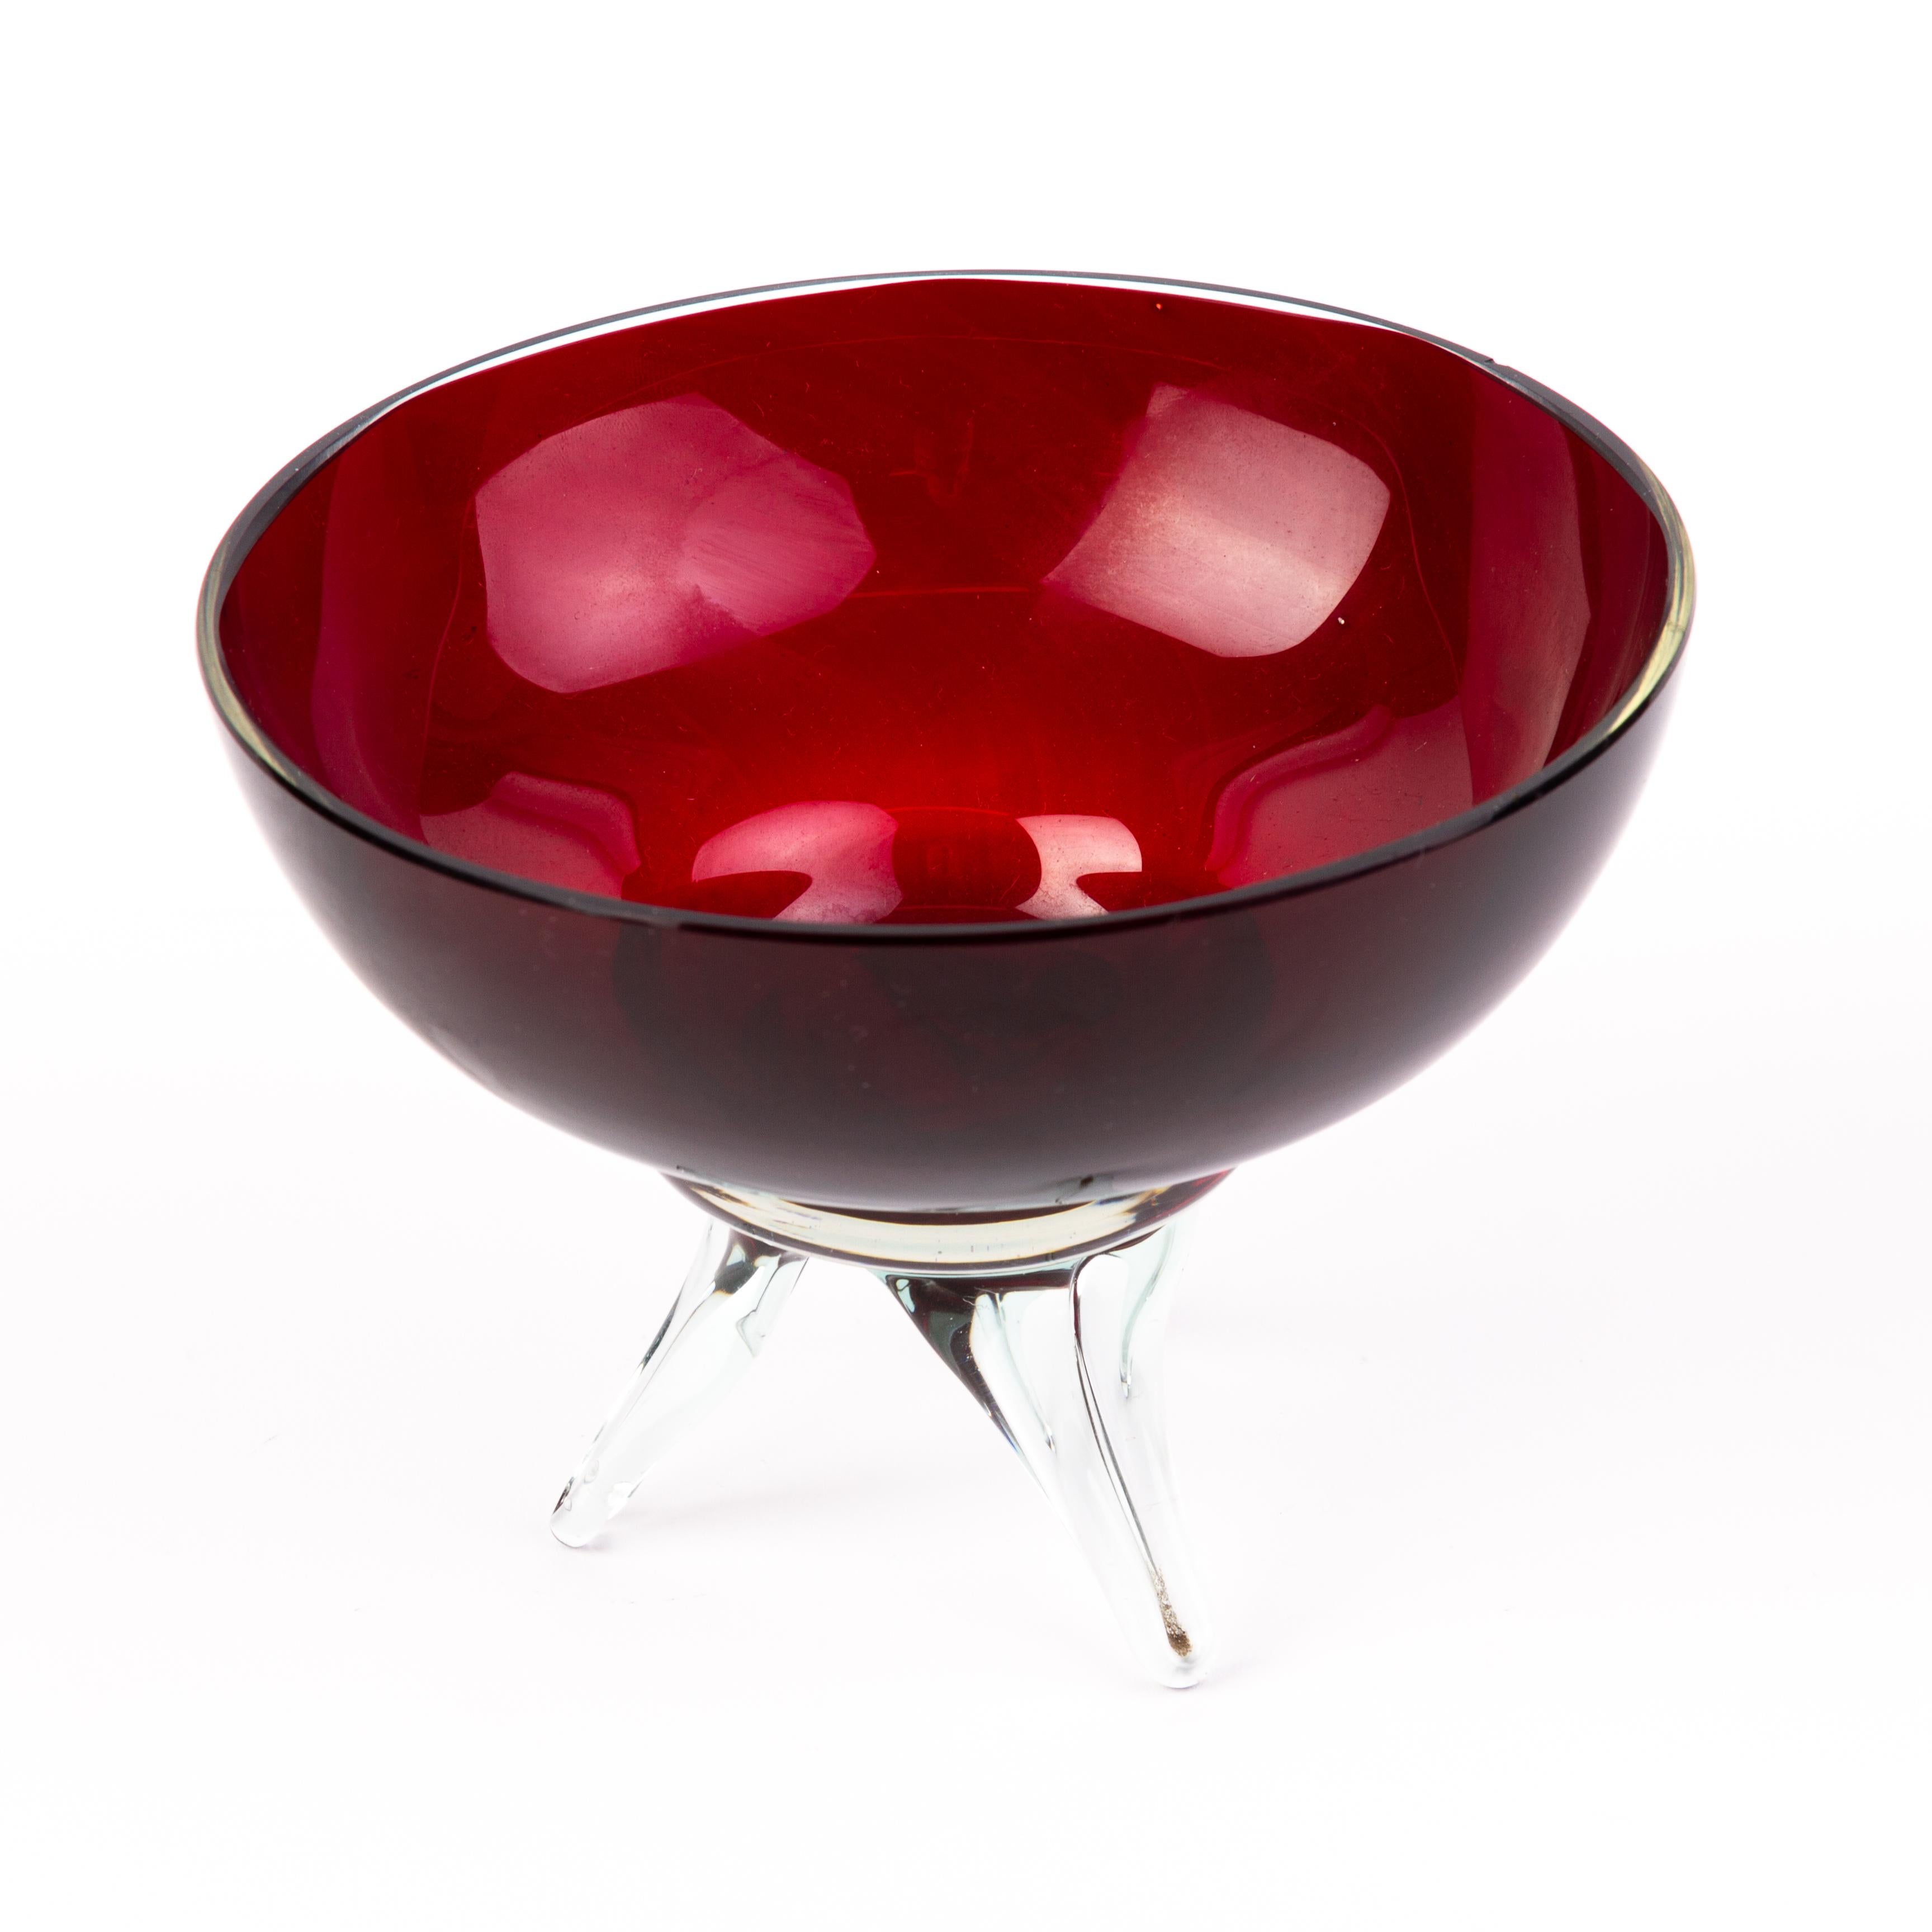 Murano Venetian Glass Designer Bowl 
Good condition
Free international shipping.